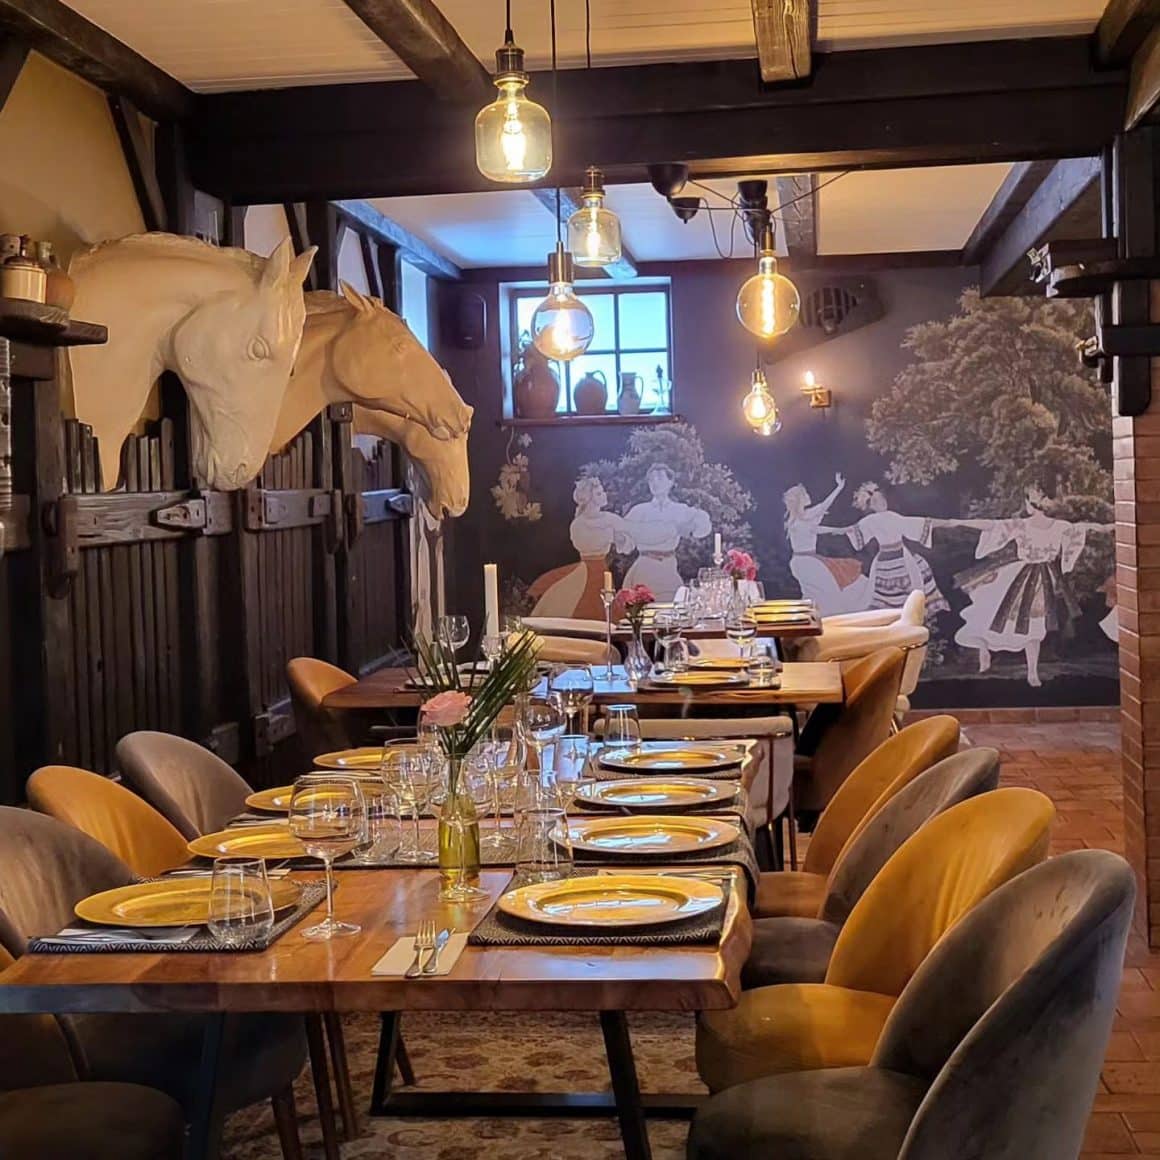 interiorul restauratului White Horse Pub & Restaurant, cu mese intinsa in dreptul carora se afla pe perete busturile unor cai stilizati